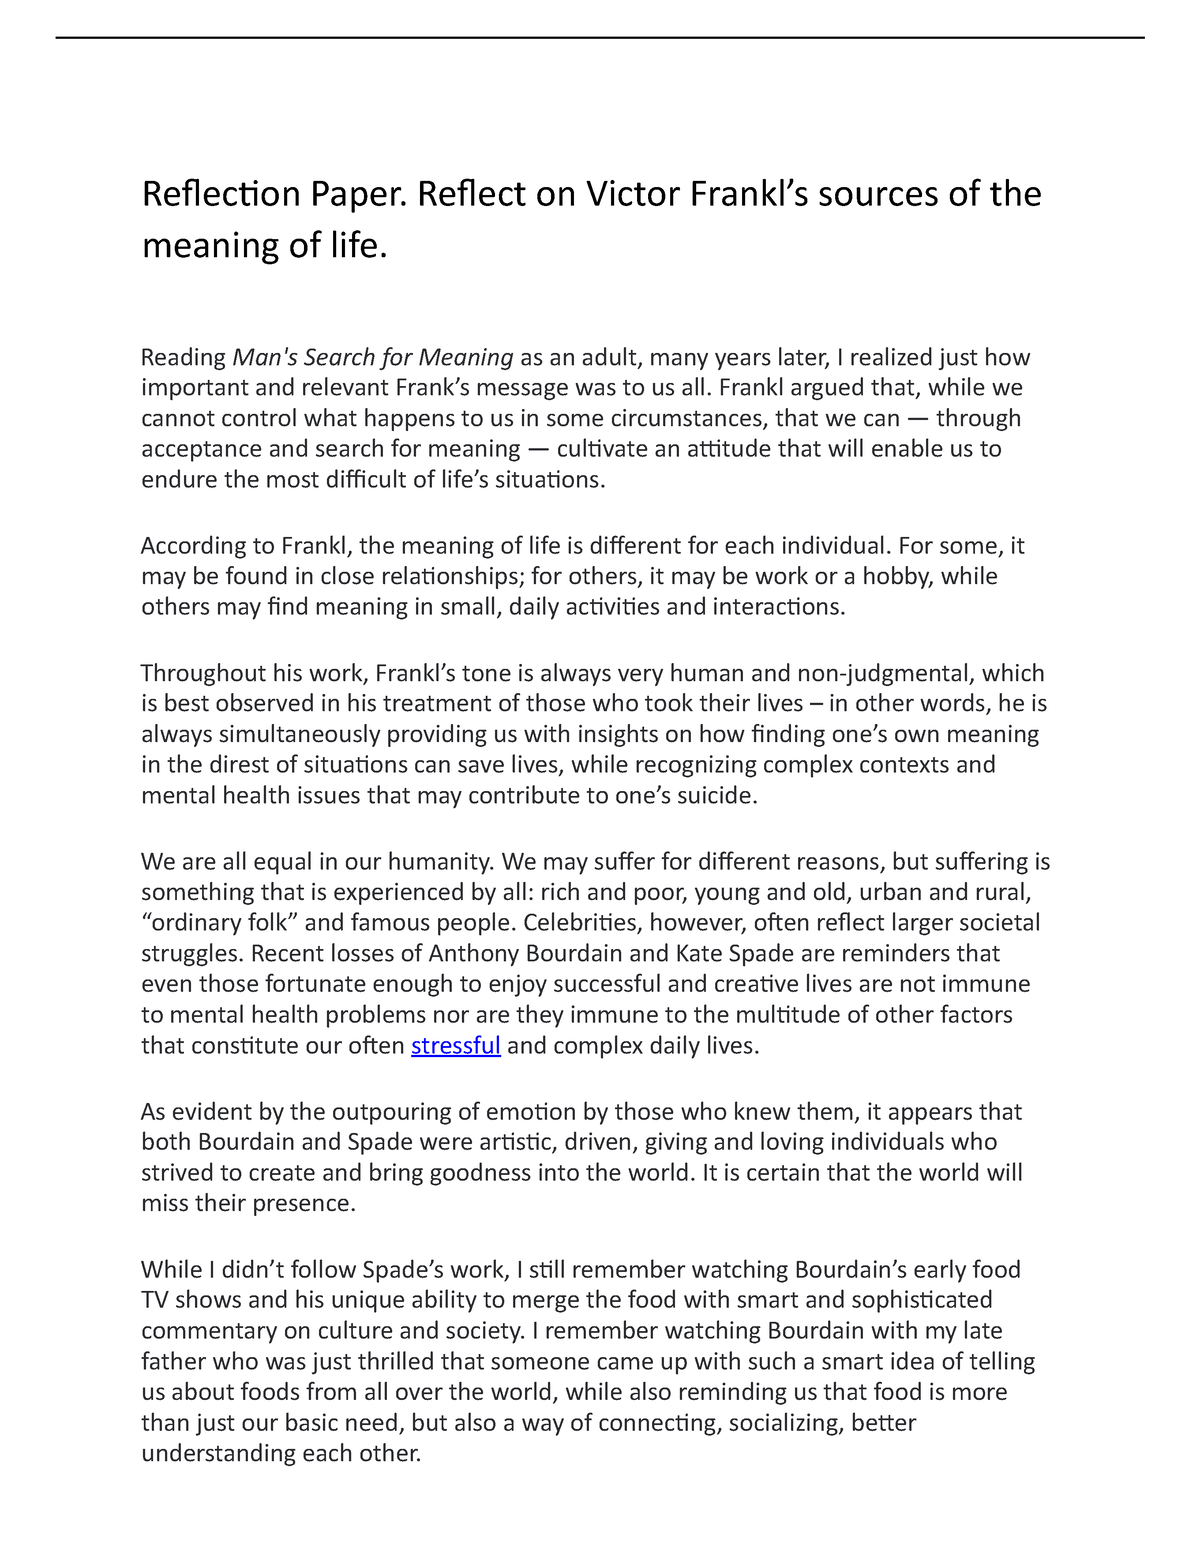 viktor frankl meaning of life reflection essay